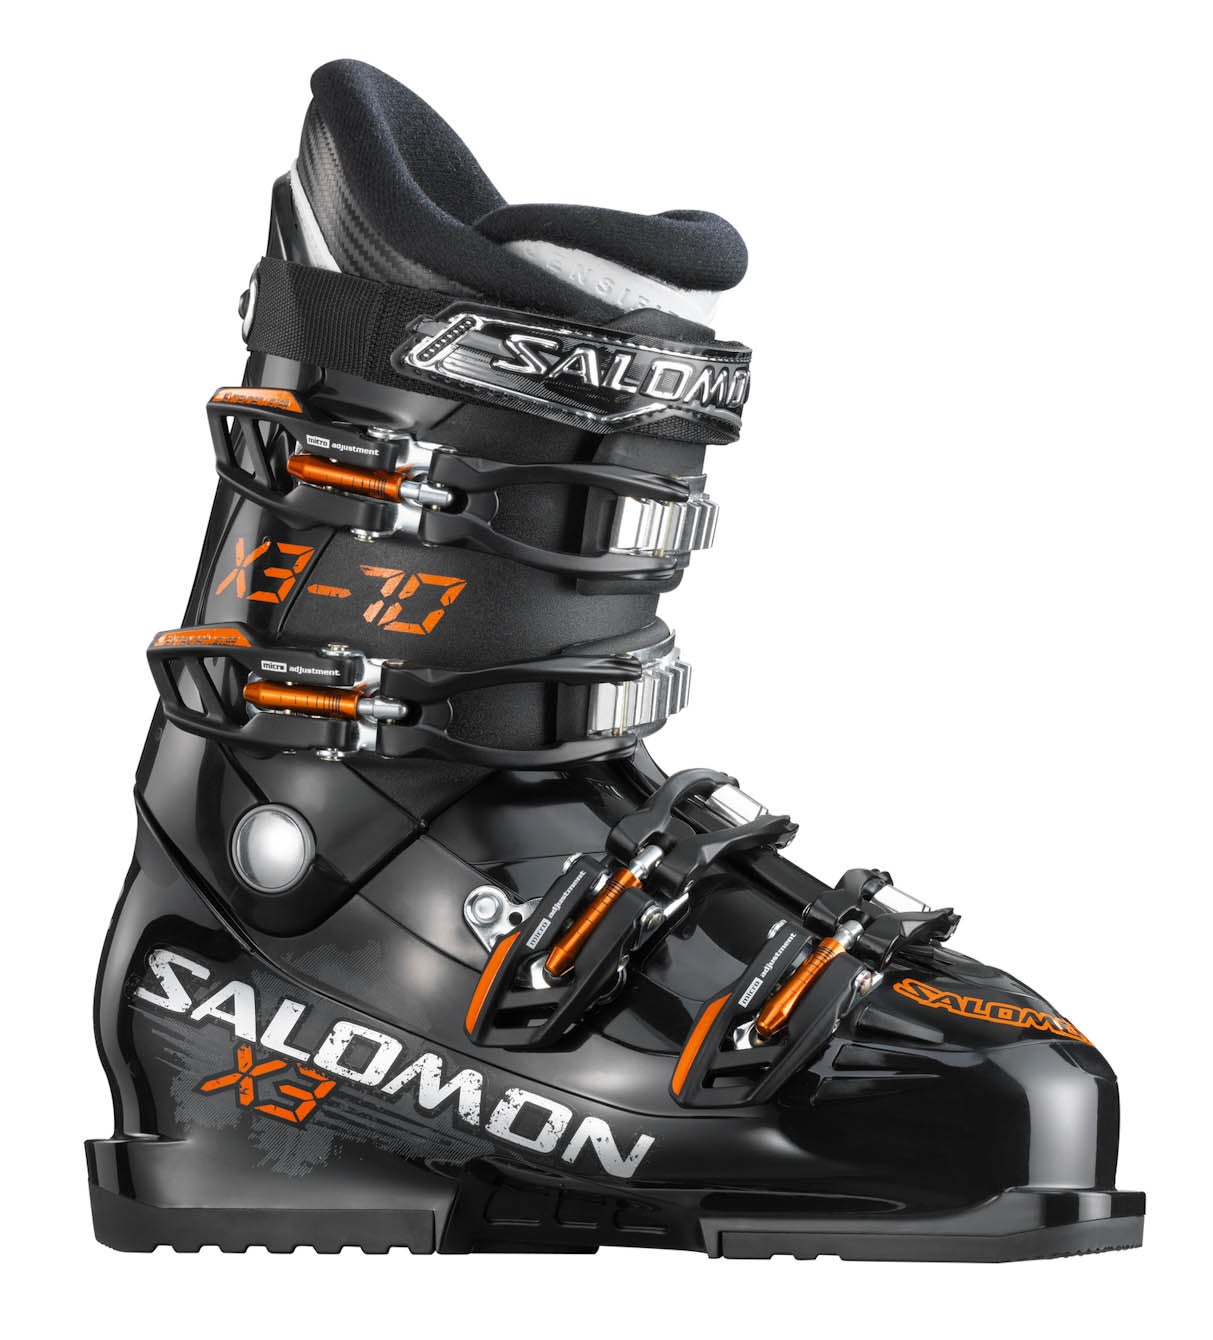 Salomon X3 70 (2012) - Ski